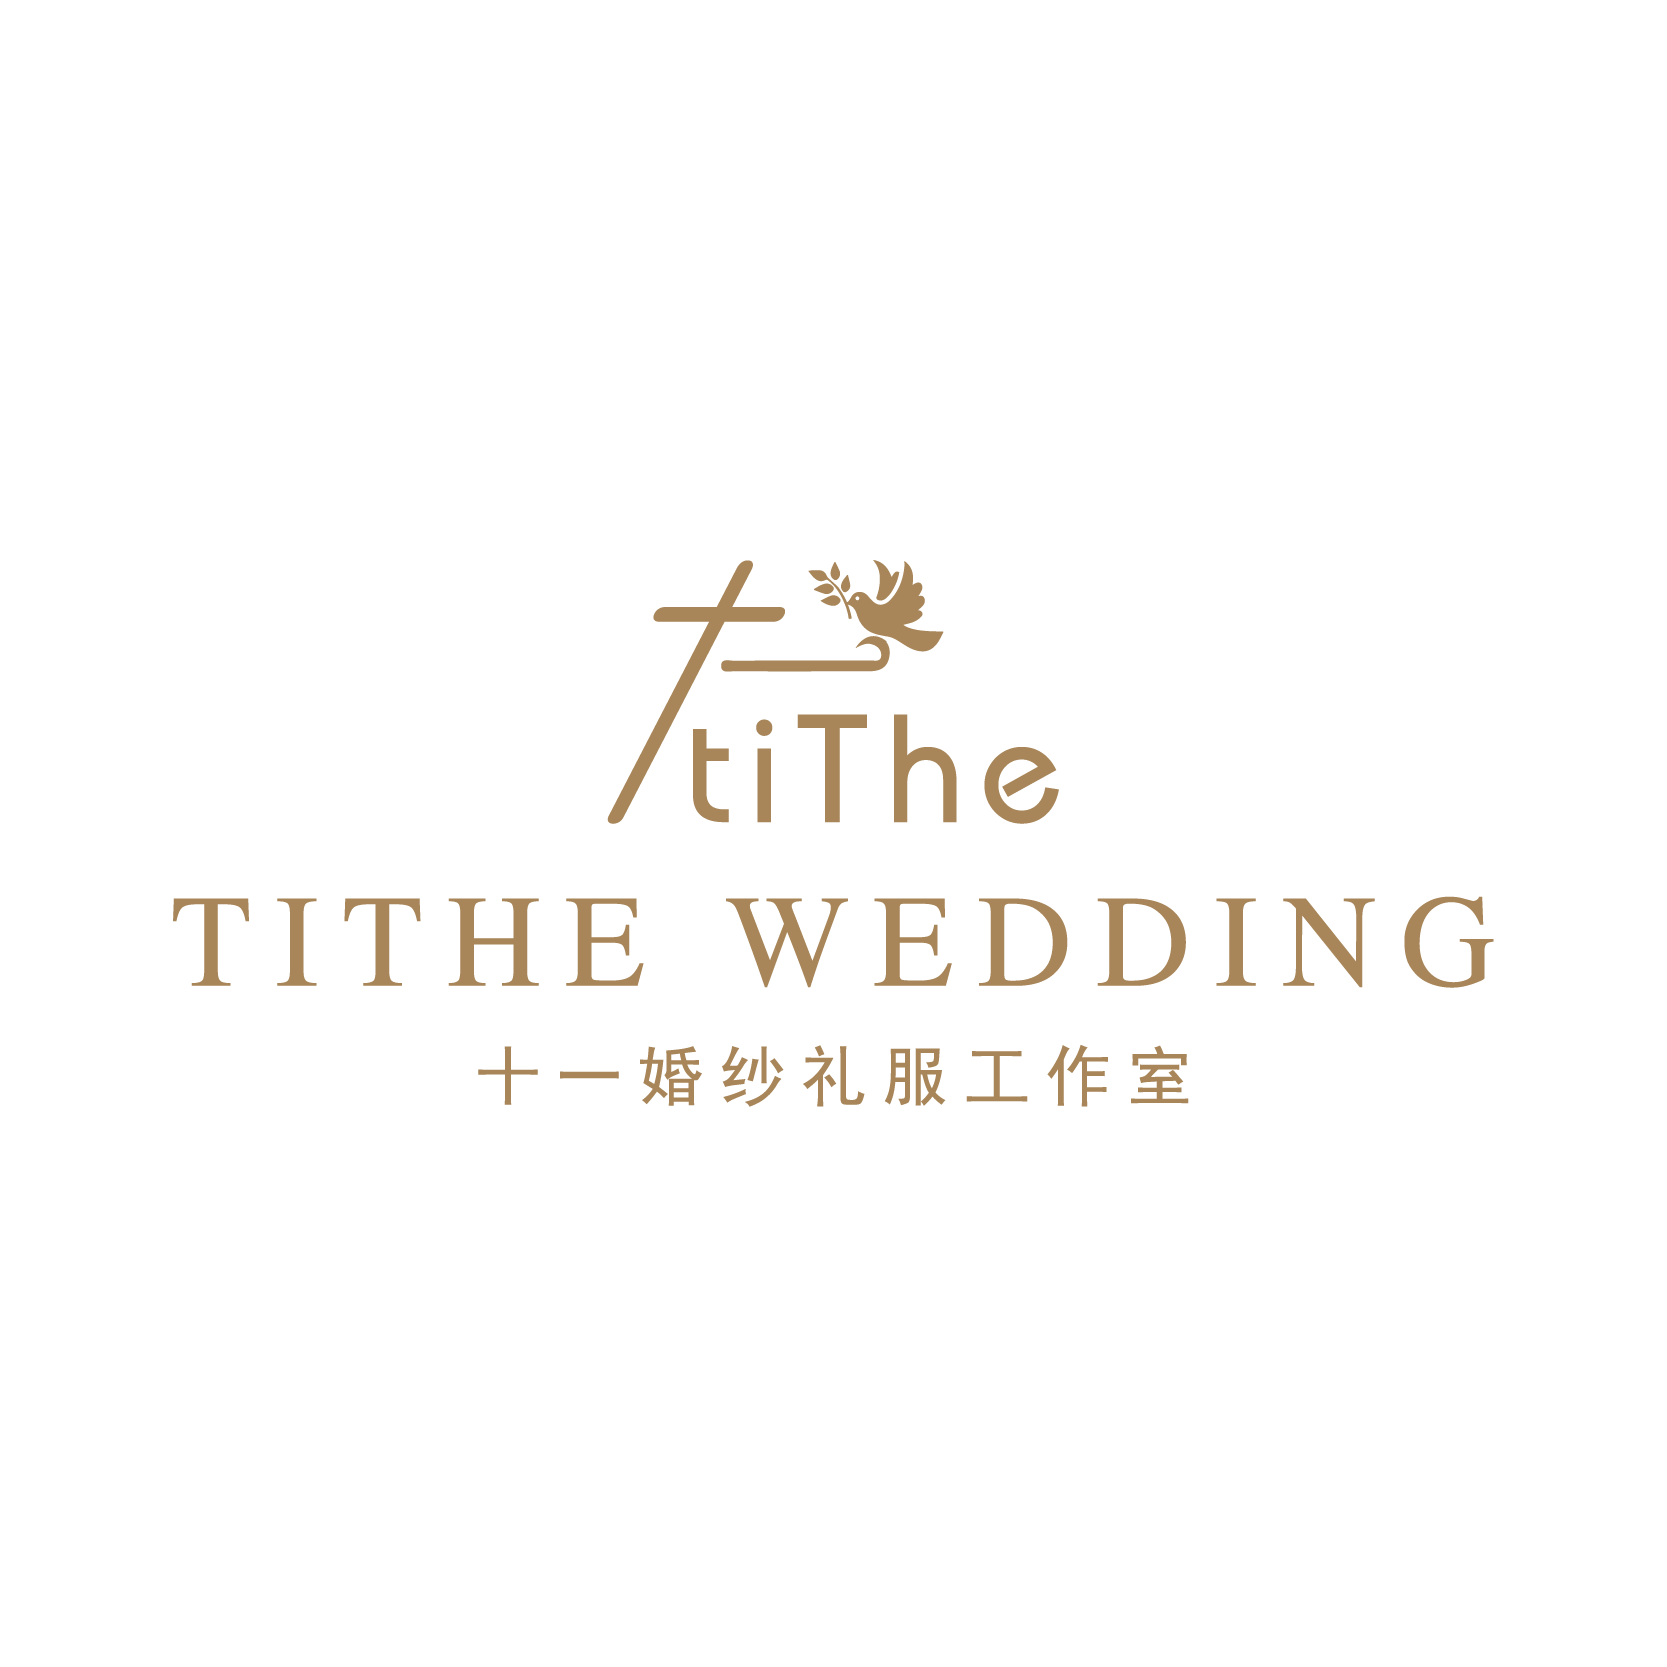 Tithe Wedding 十一婚纱